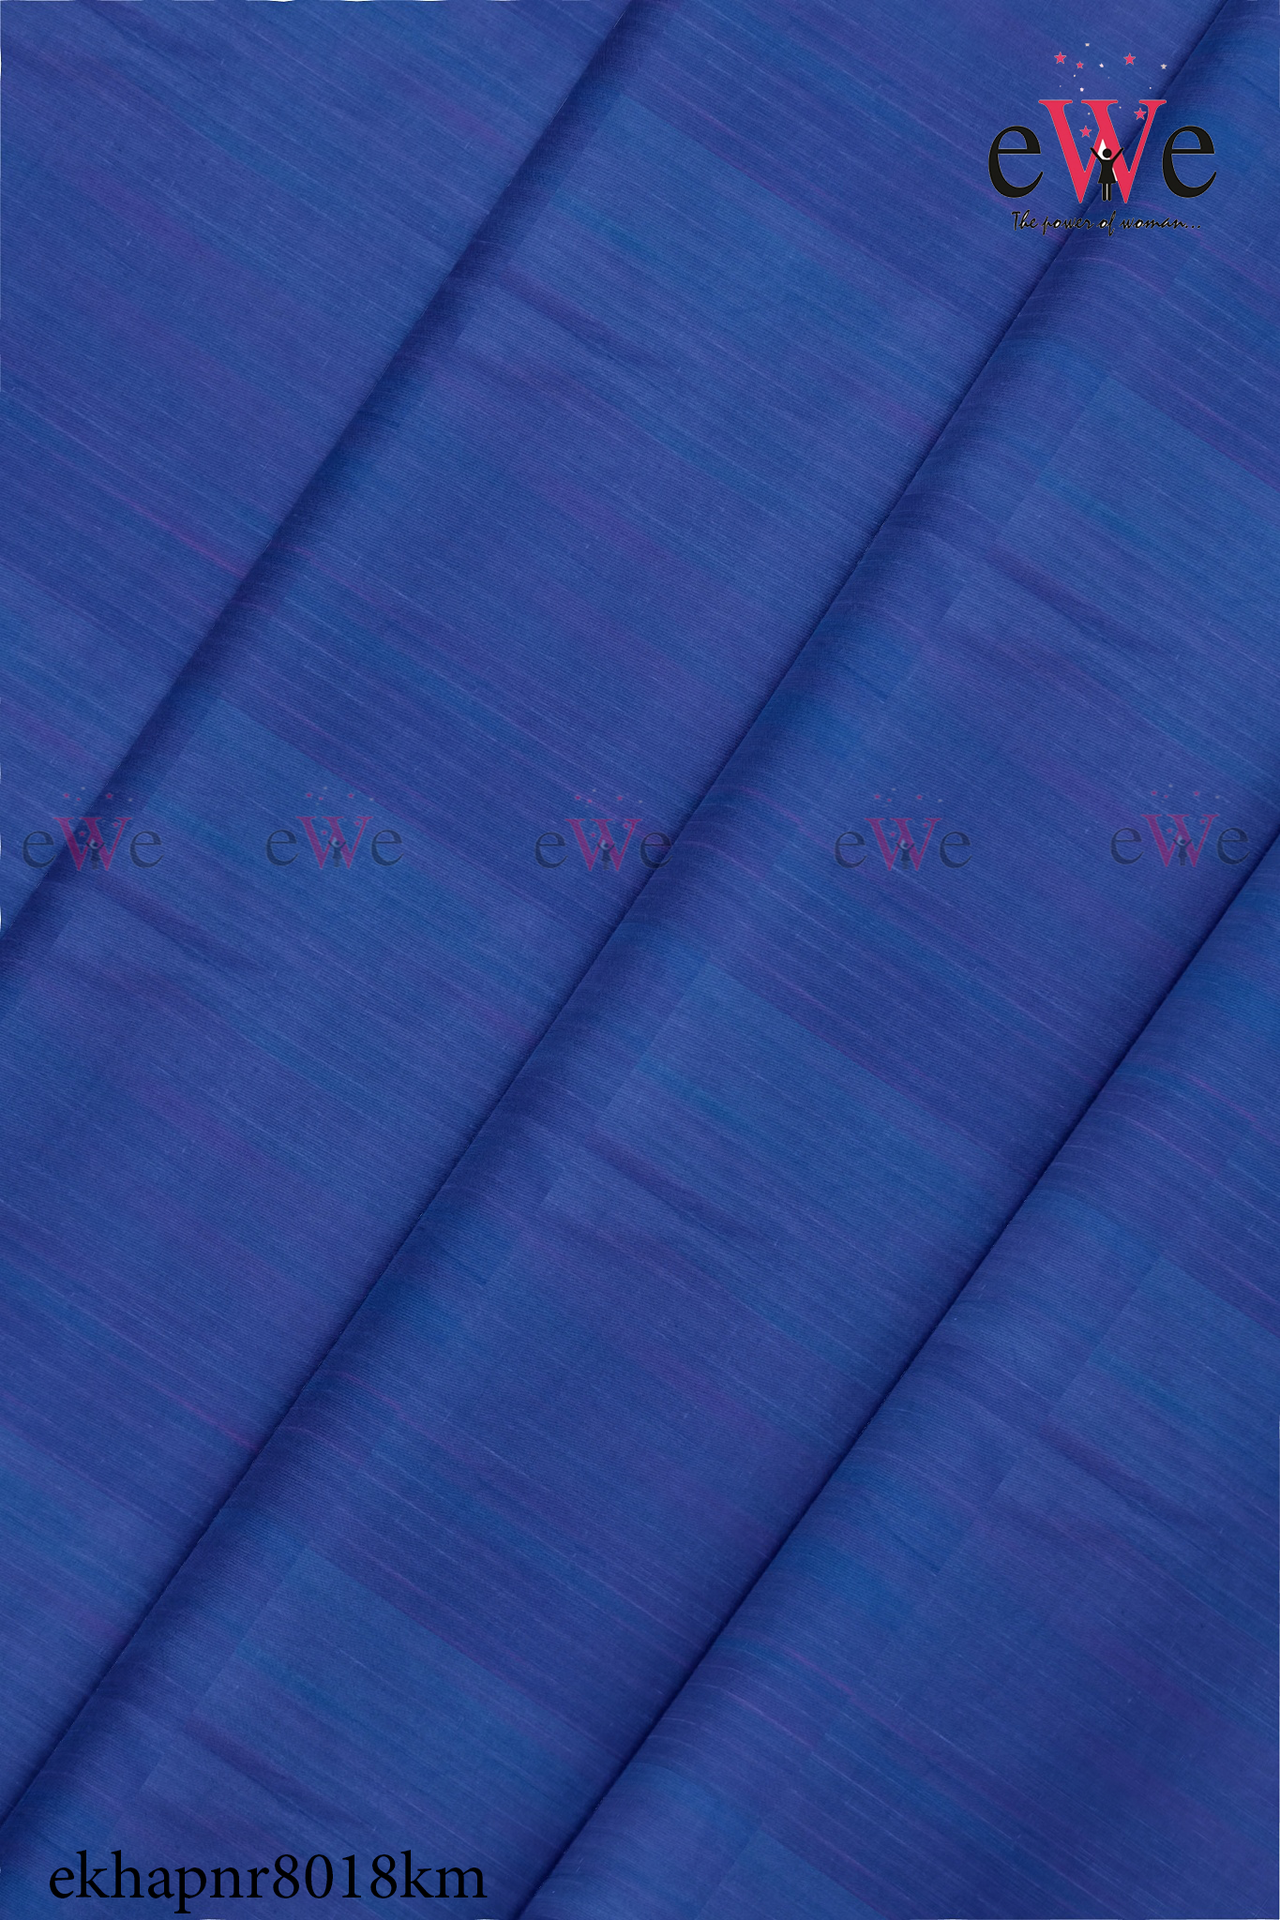 Royal Blue Handspun Handwoven Khadi Fabric